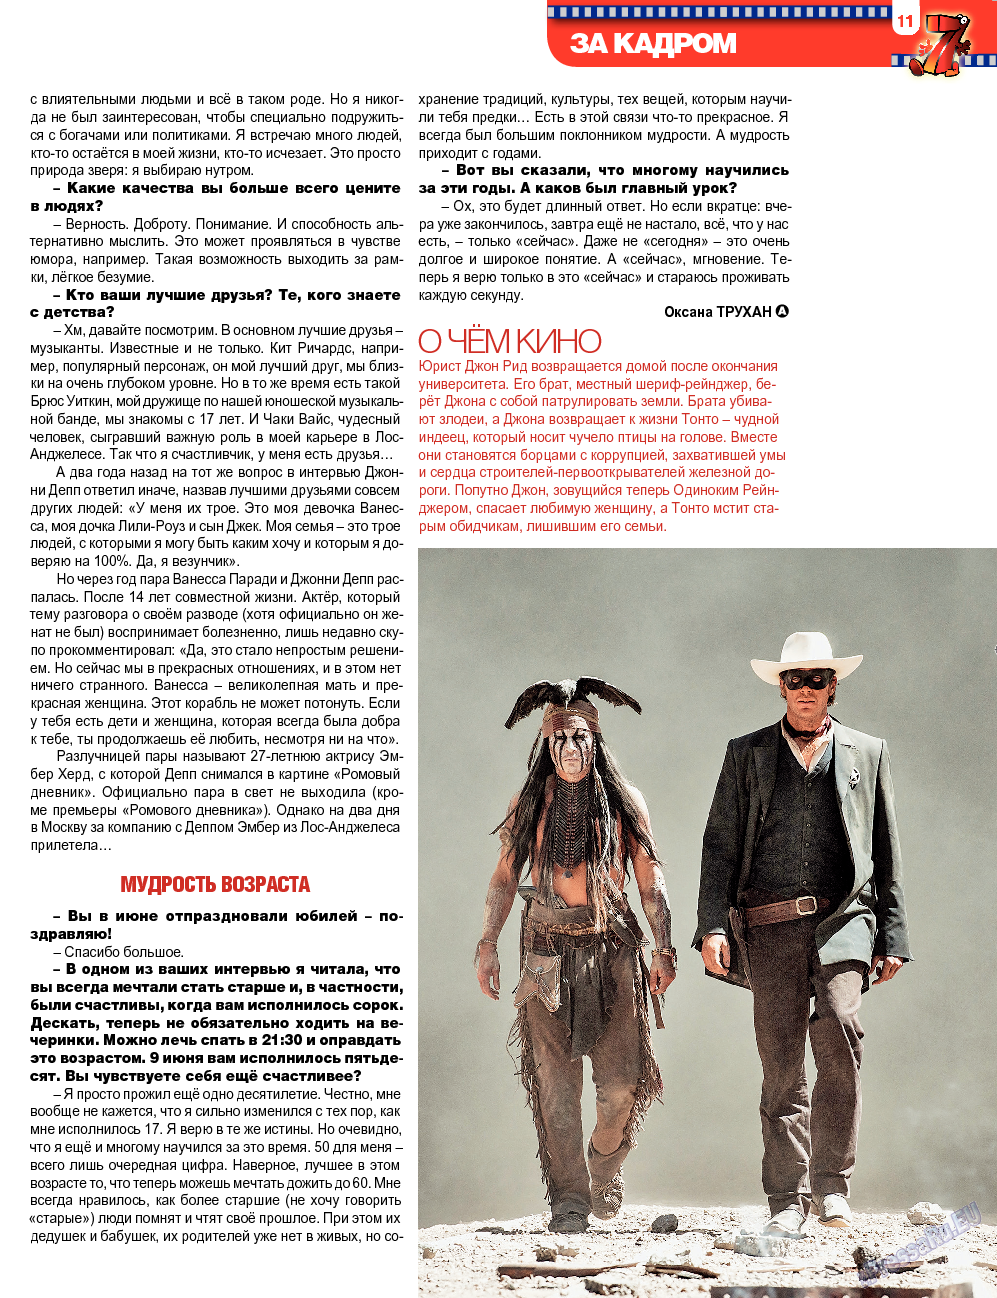 7плюс7я (журнал). 2013 год, номер 30, стр. 74